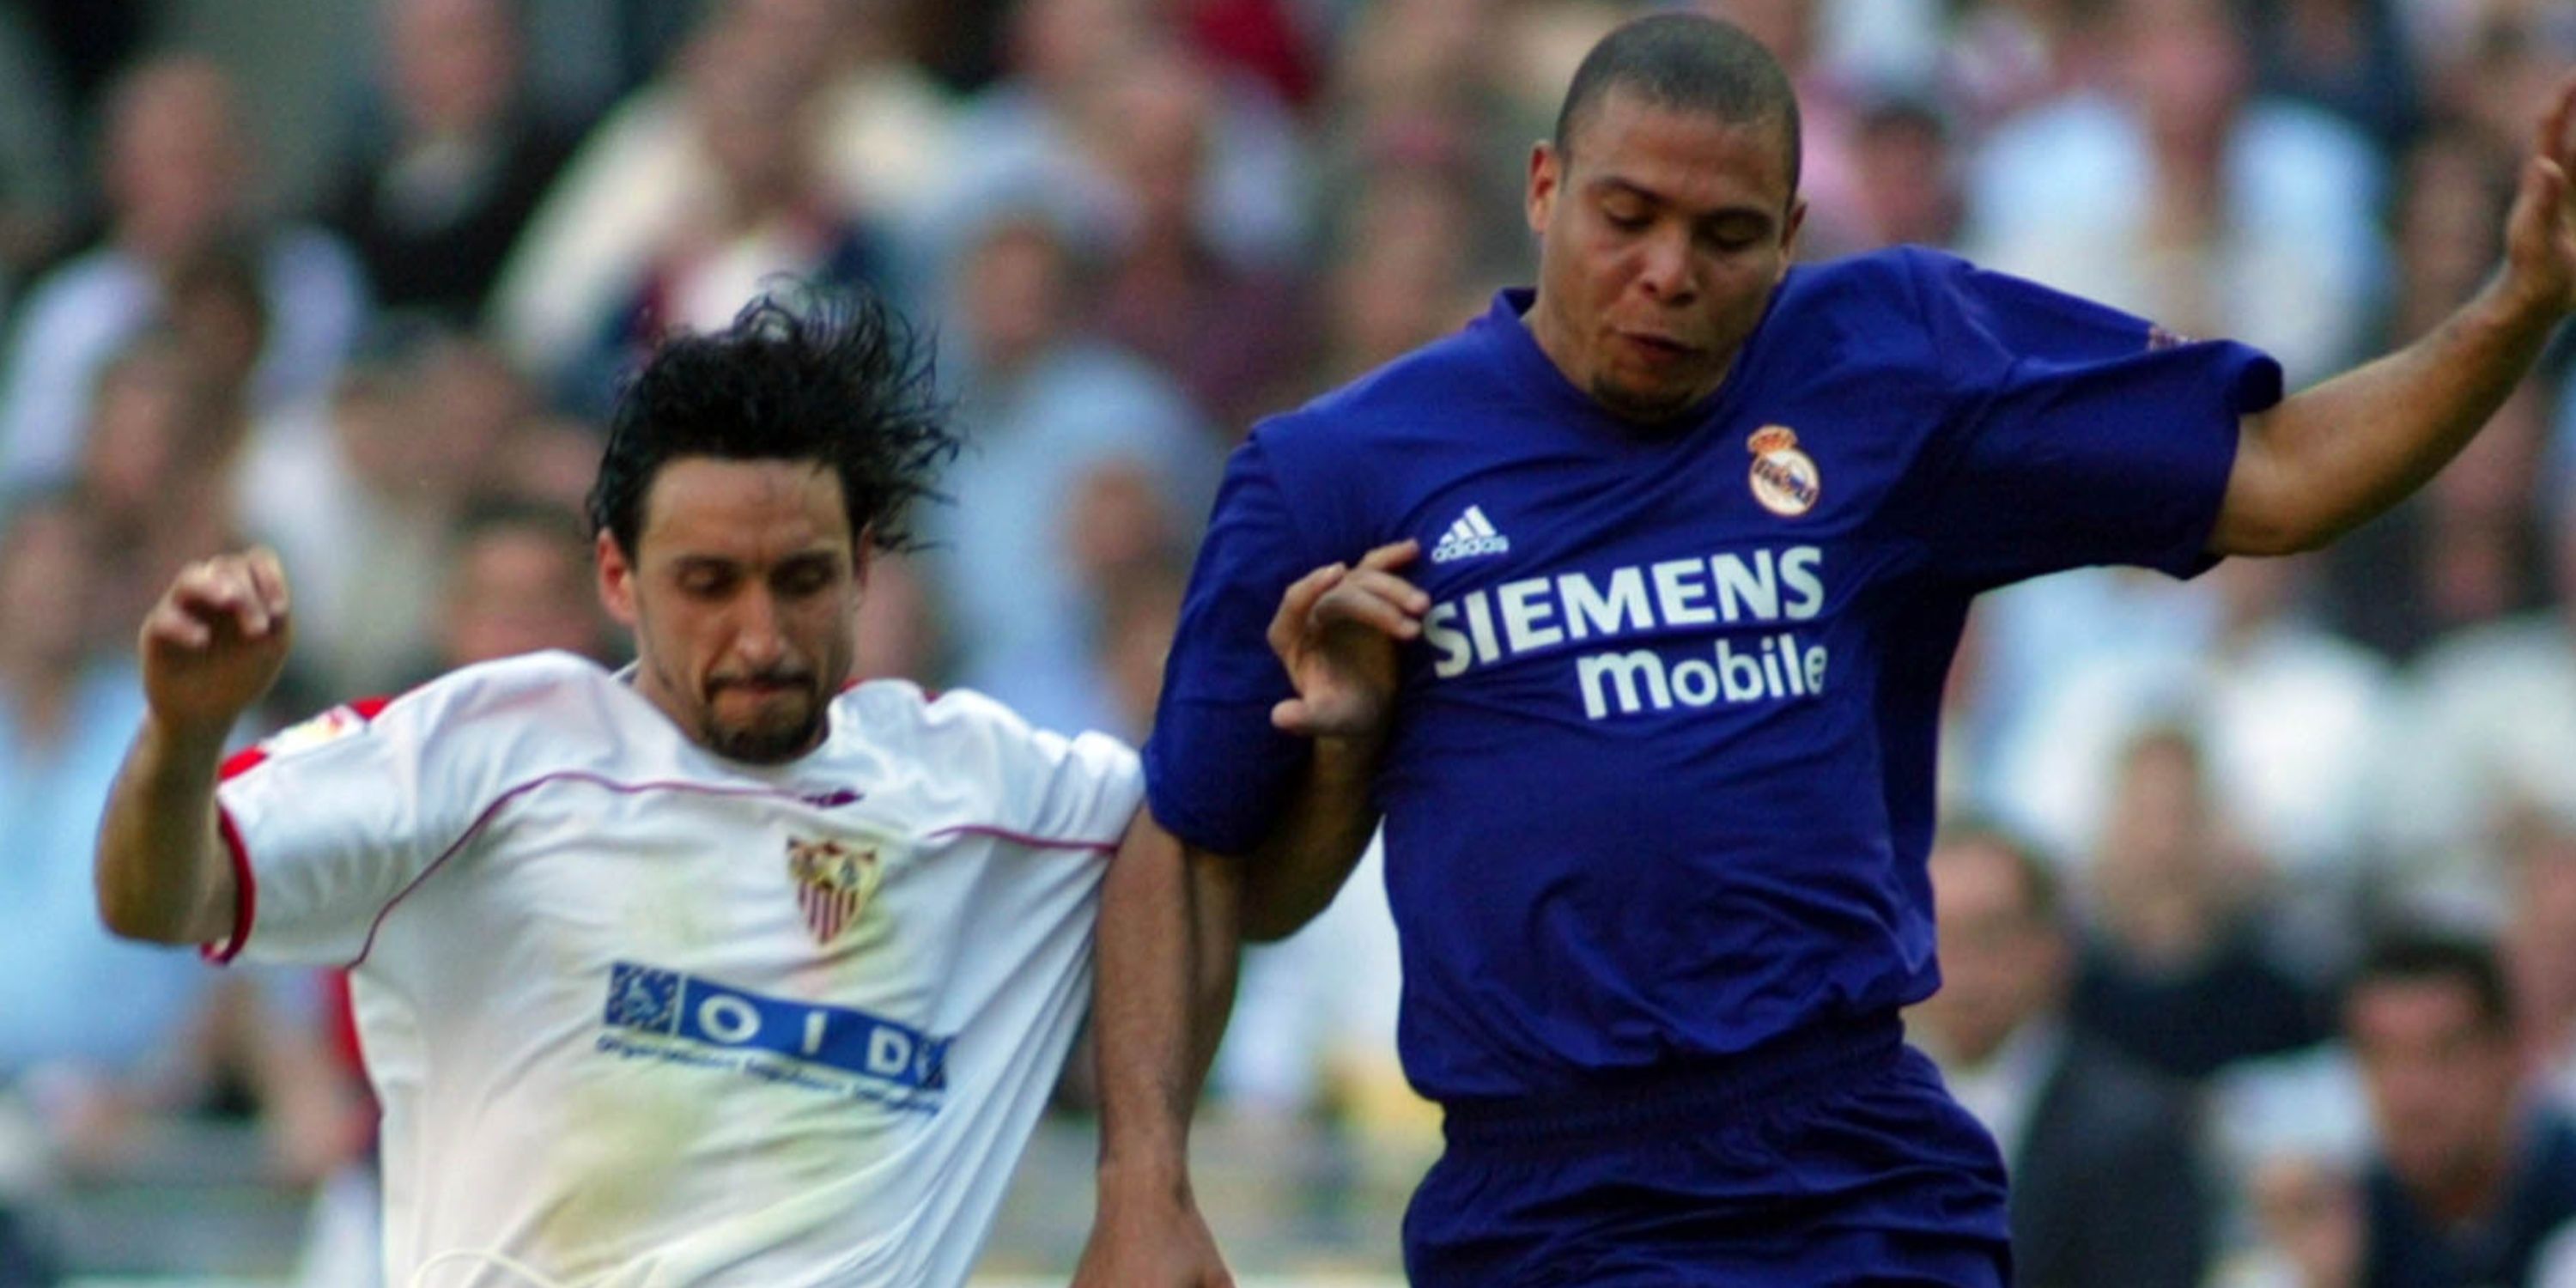 Pablo Alfaro (left) in action for Sevilla vs Real Madrid